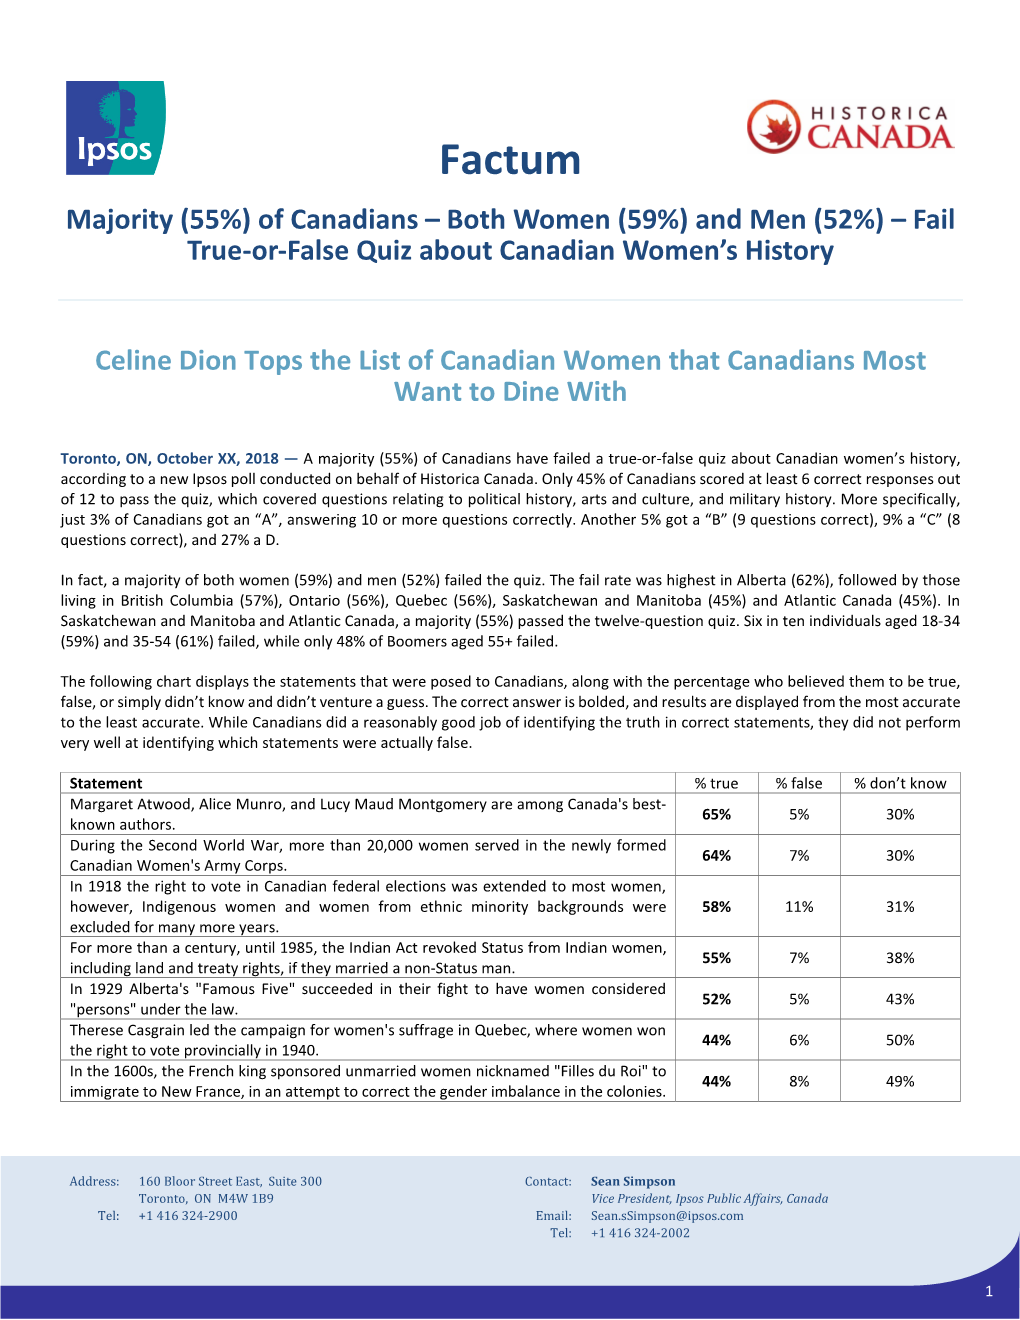 Factum Majority (55%) of Canadians – Both Women (59%) and Men (52%) – Fail True-Or-False Quiz About Canadian Women’S History